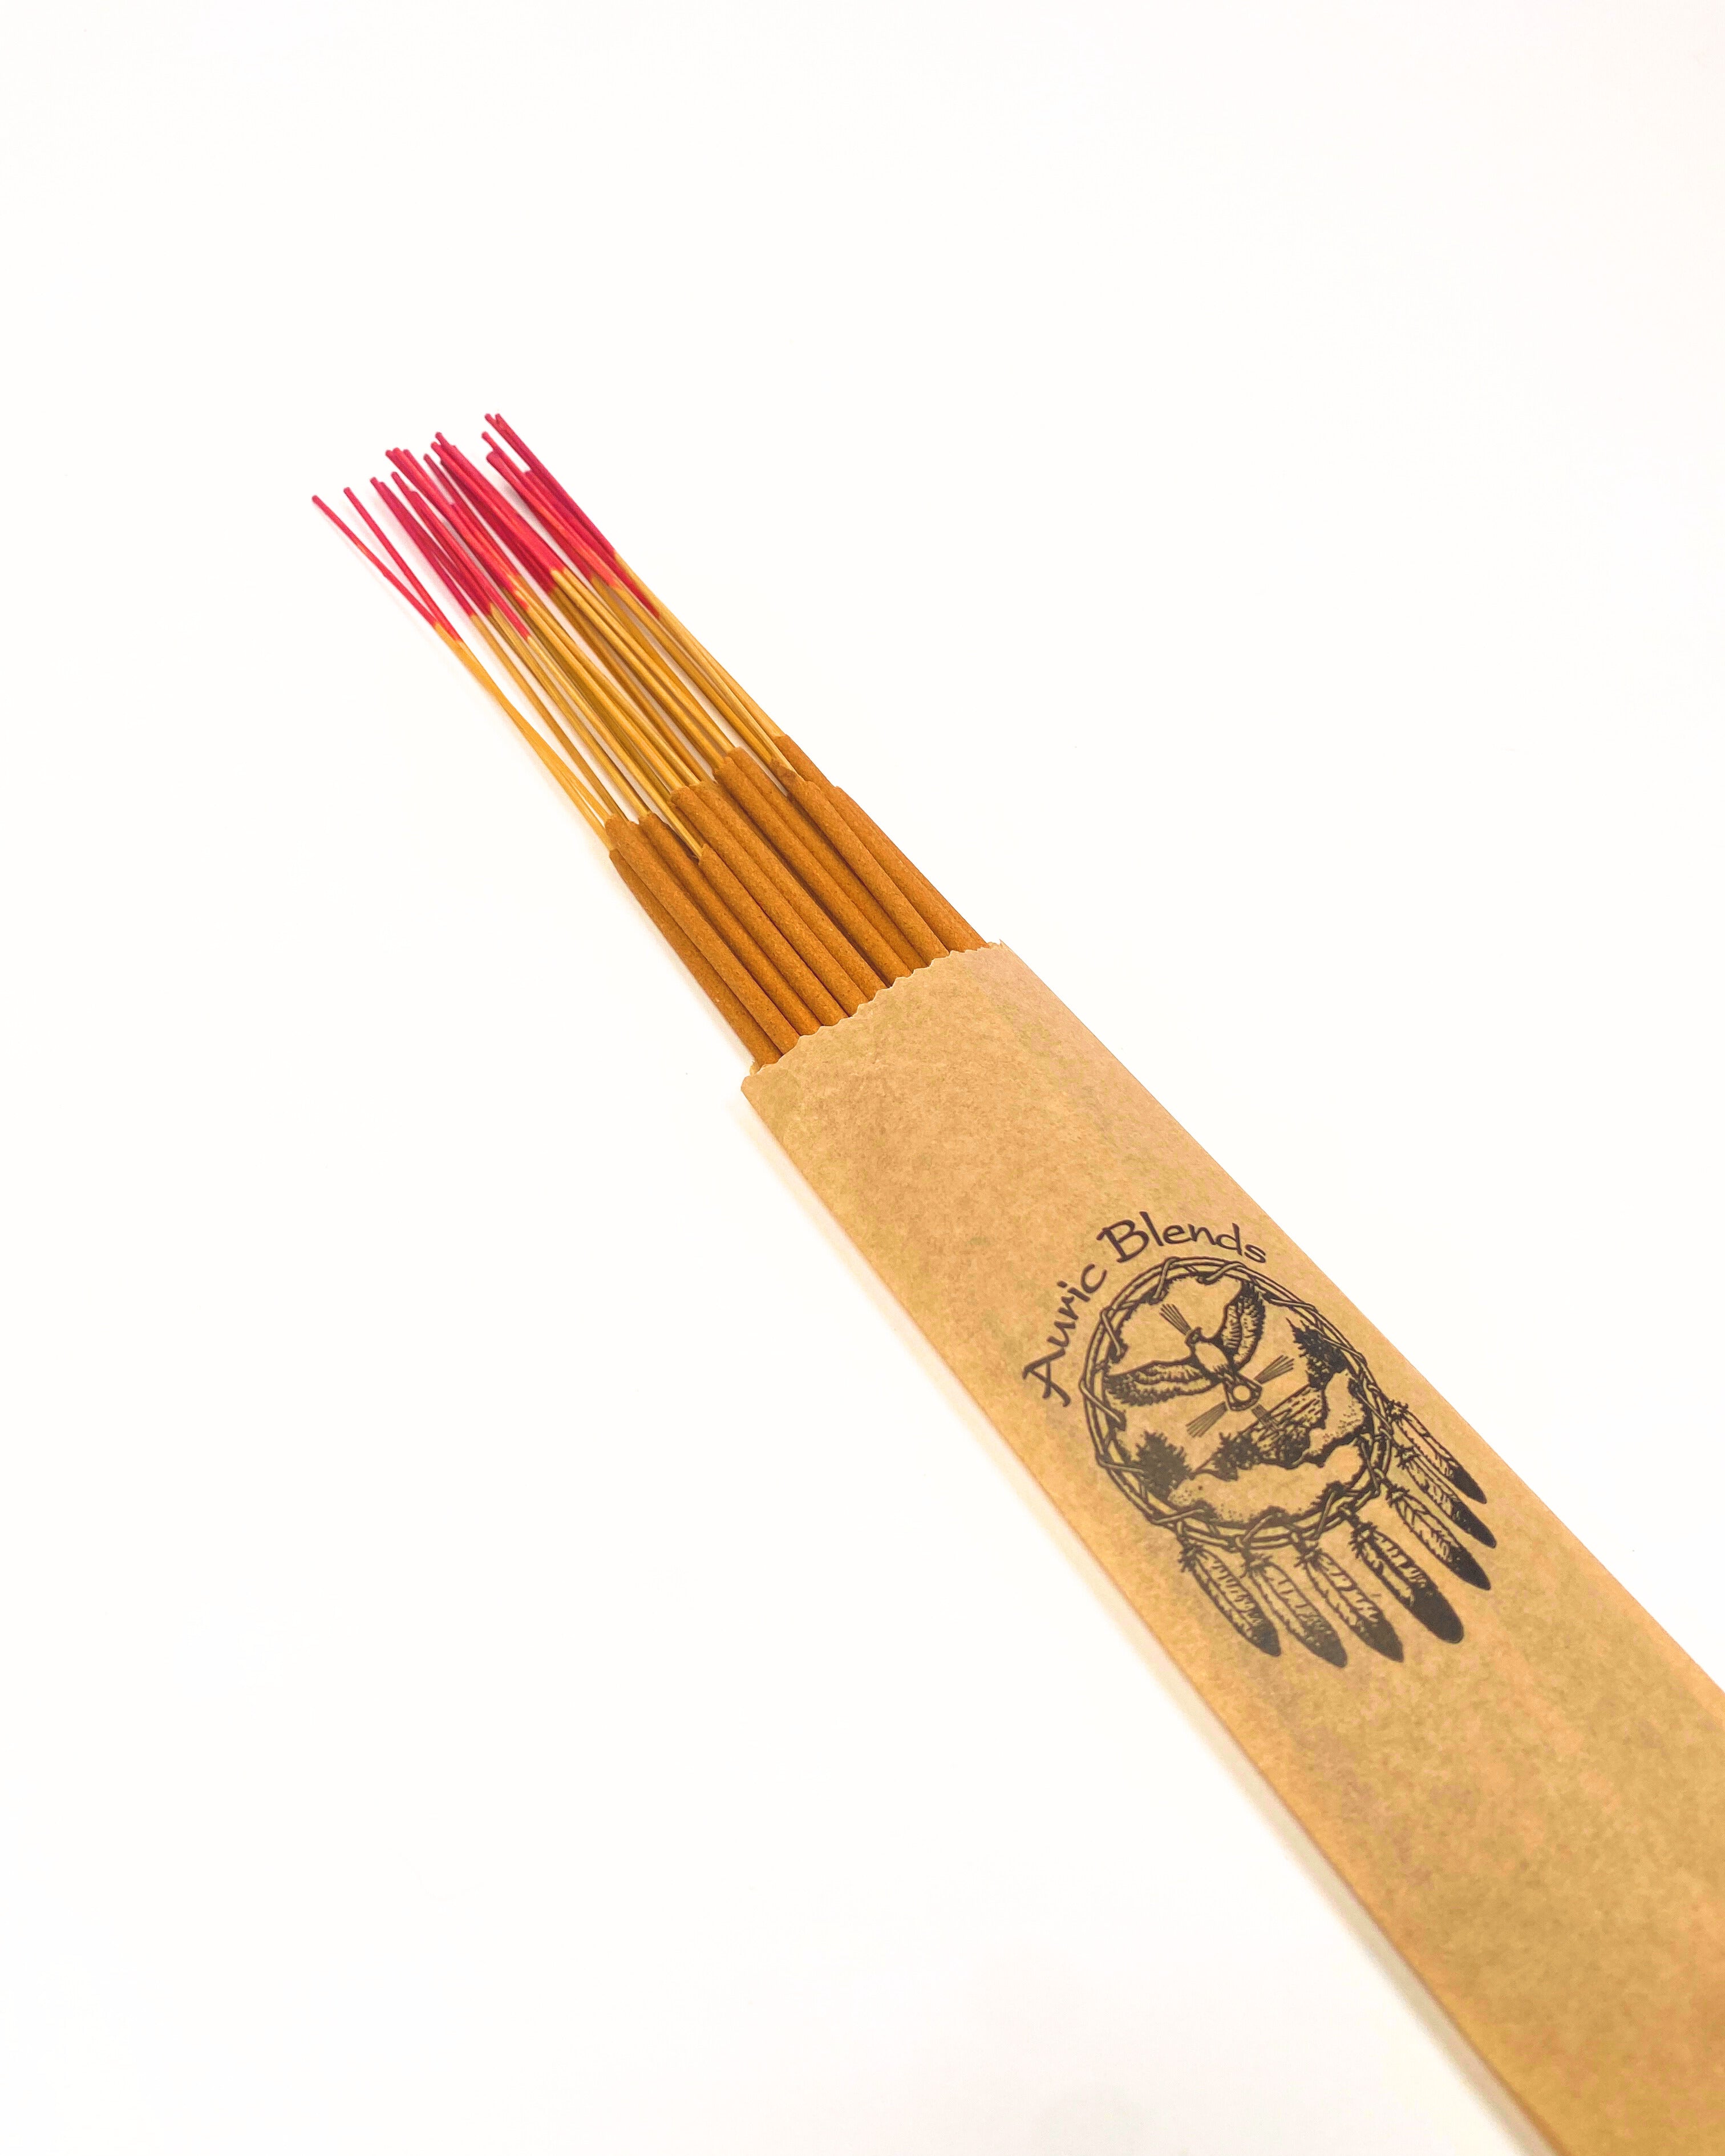 Love Incense Sticks